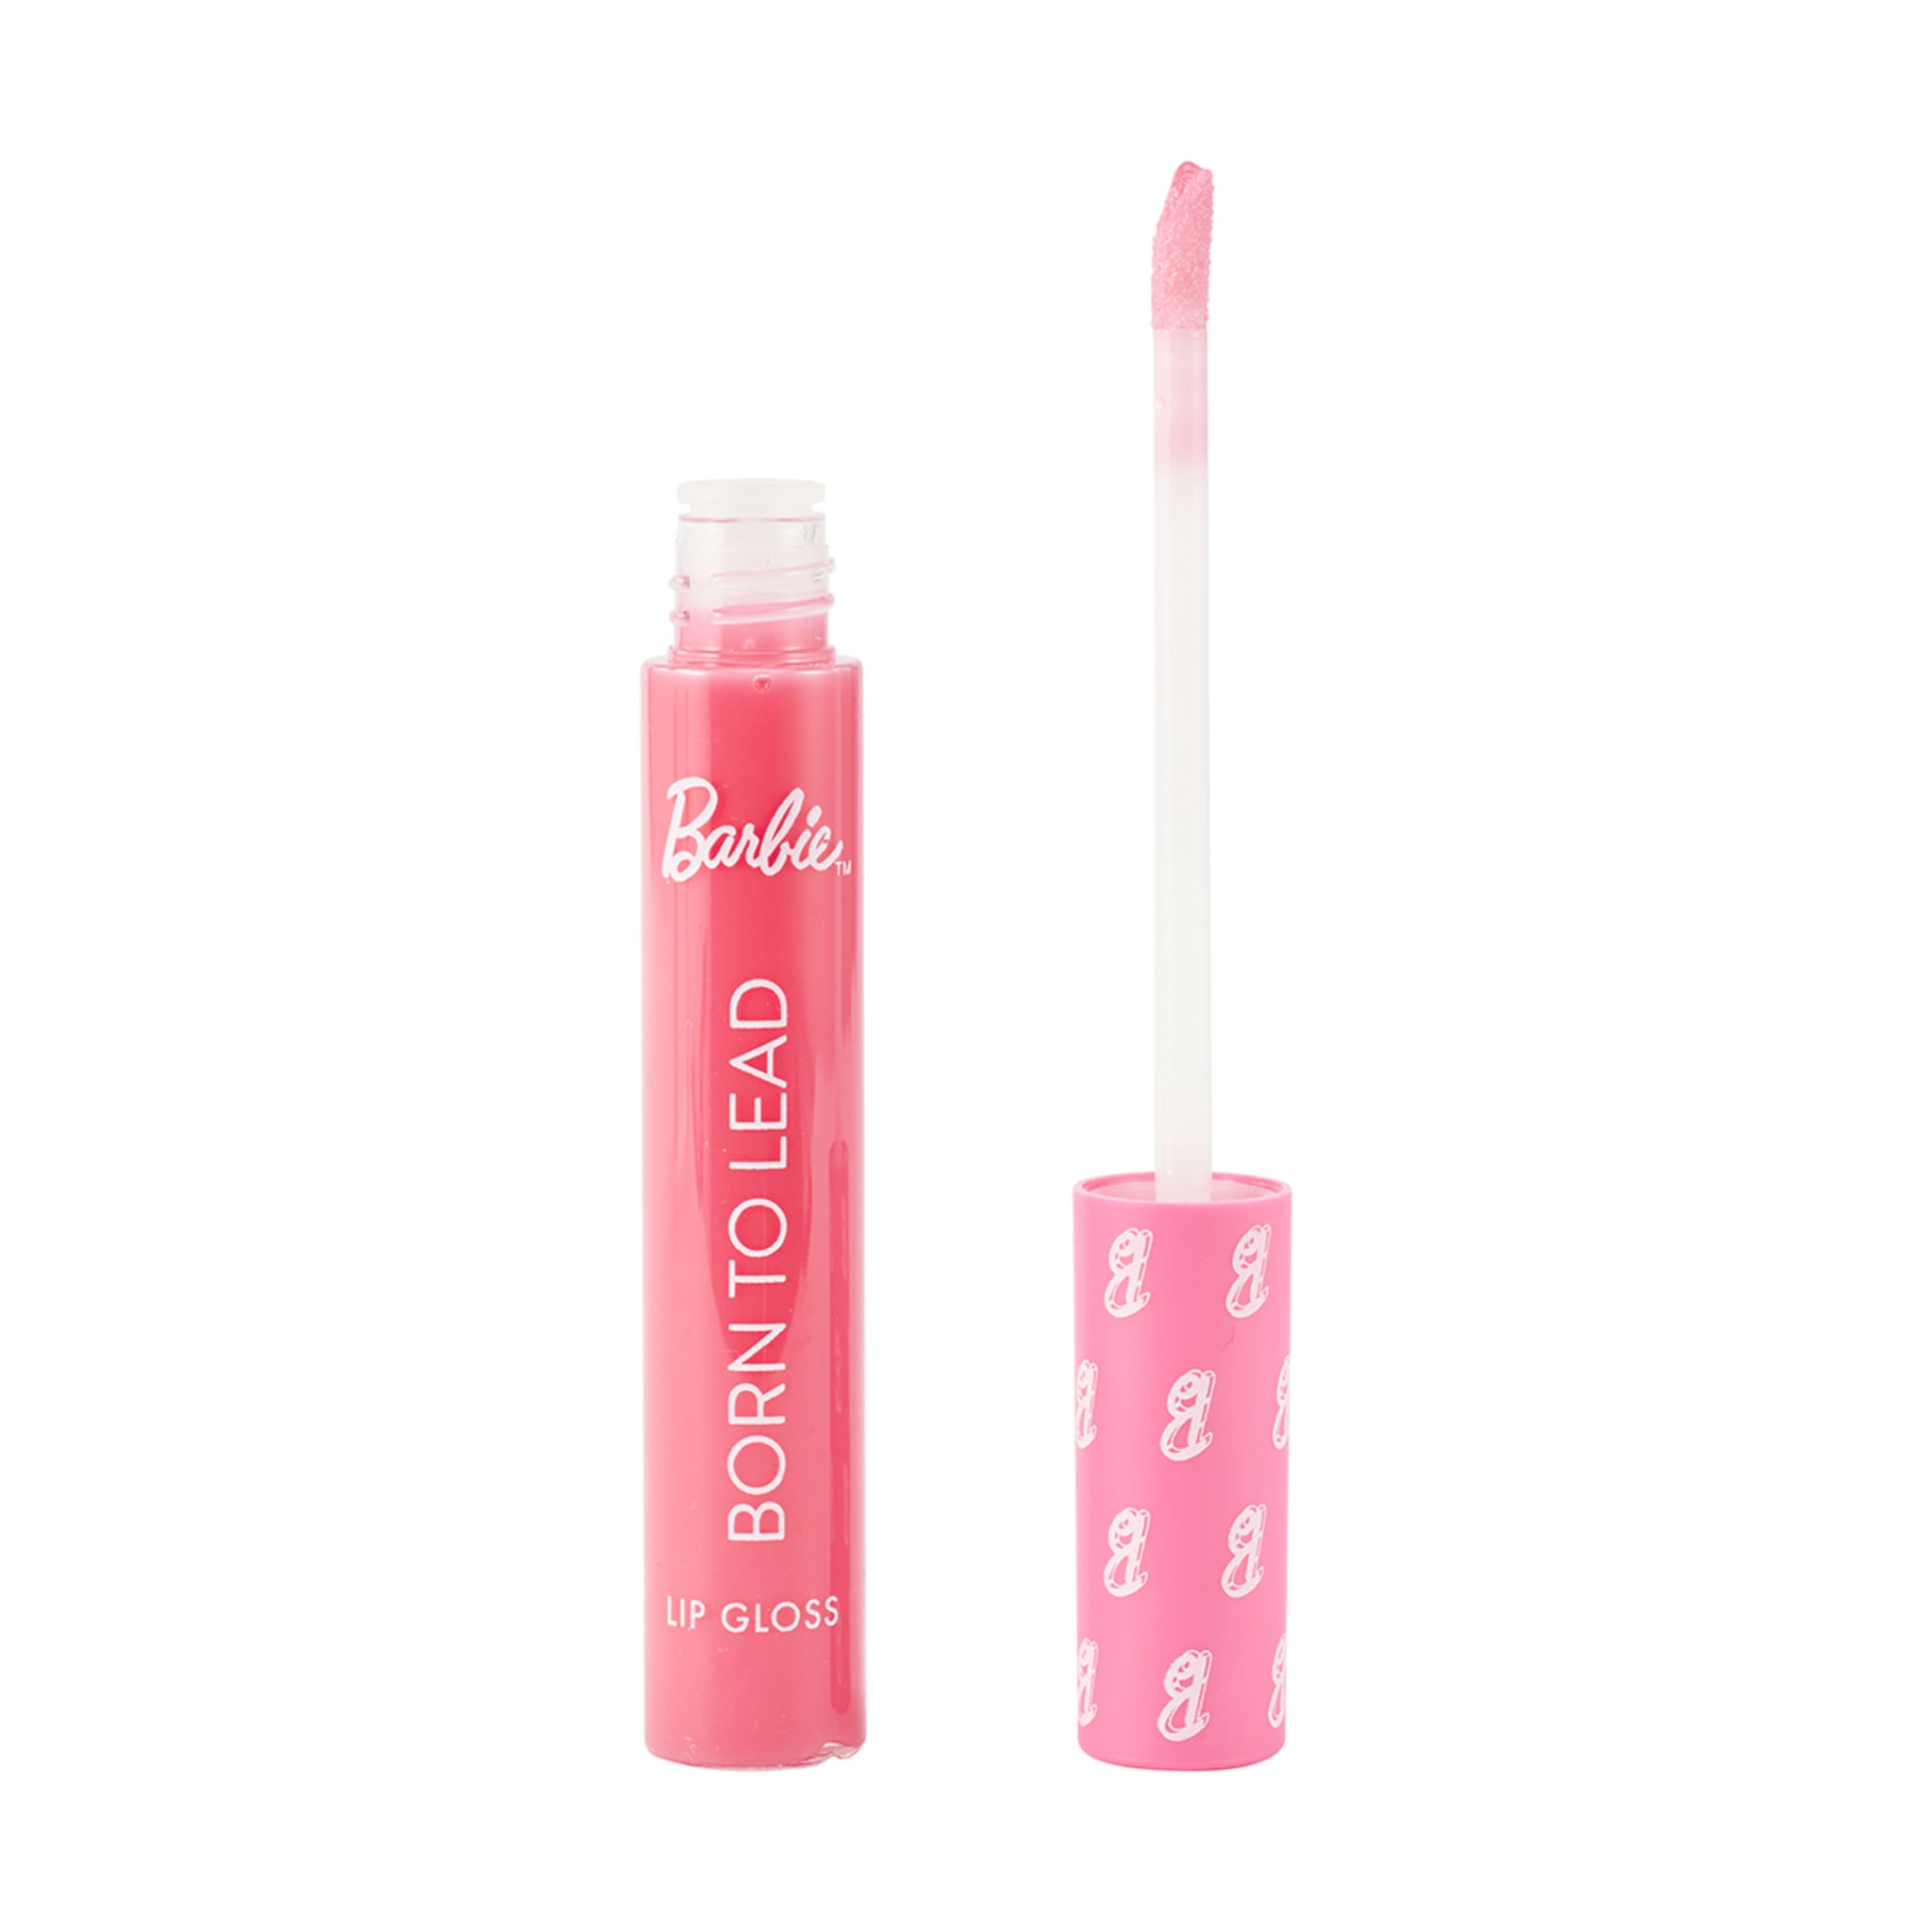 OXX Cosmetics Barbie Lip Gloss - Coral - Kmart